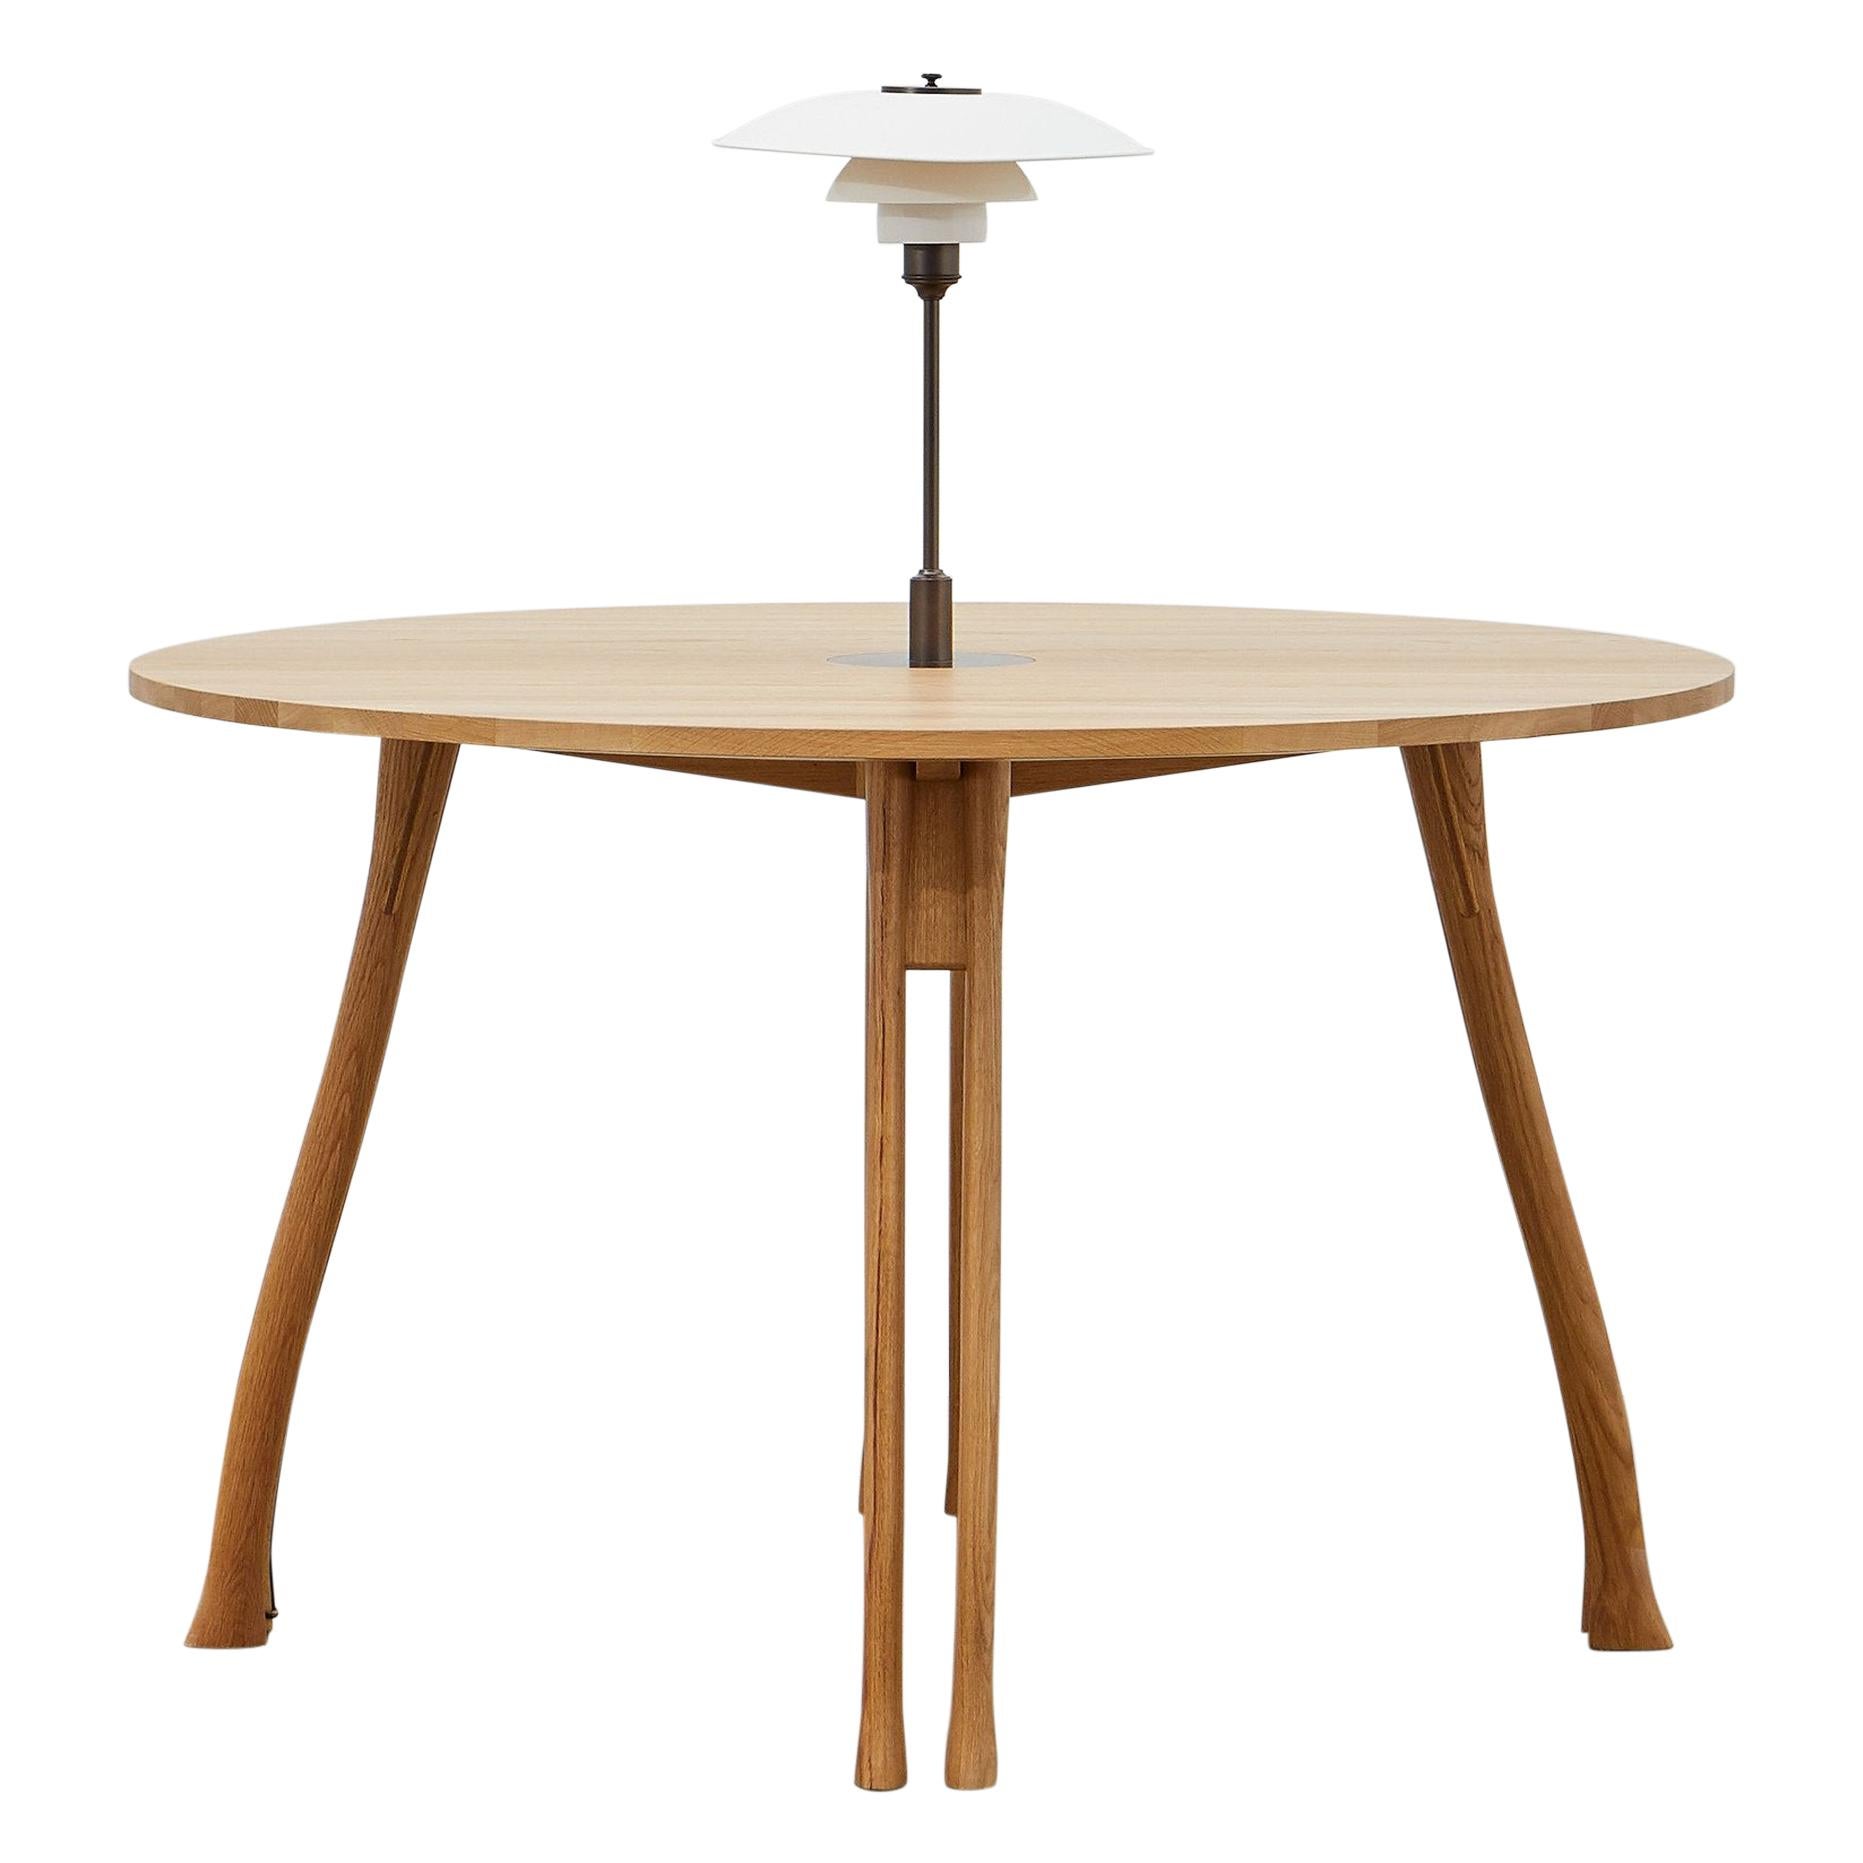 Table PH Axe, pieds en chêne naturel, plaque de table en placage, lampe PH 3 -2 blanche